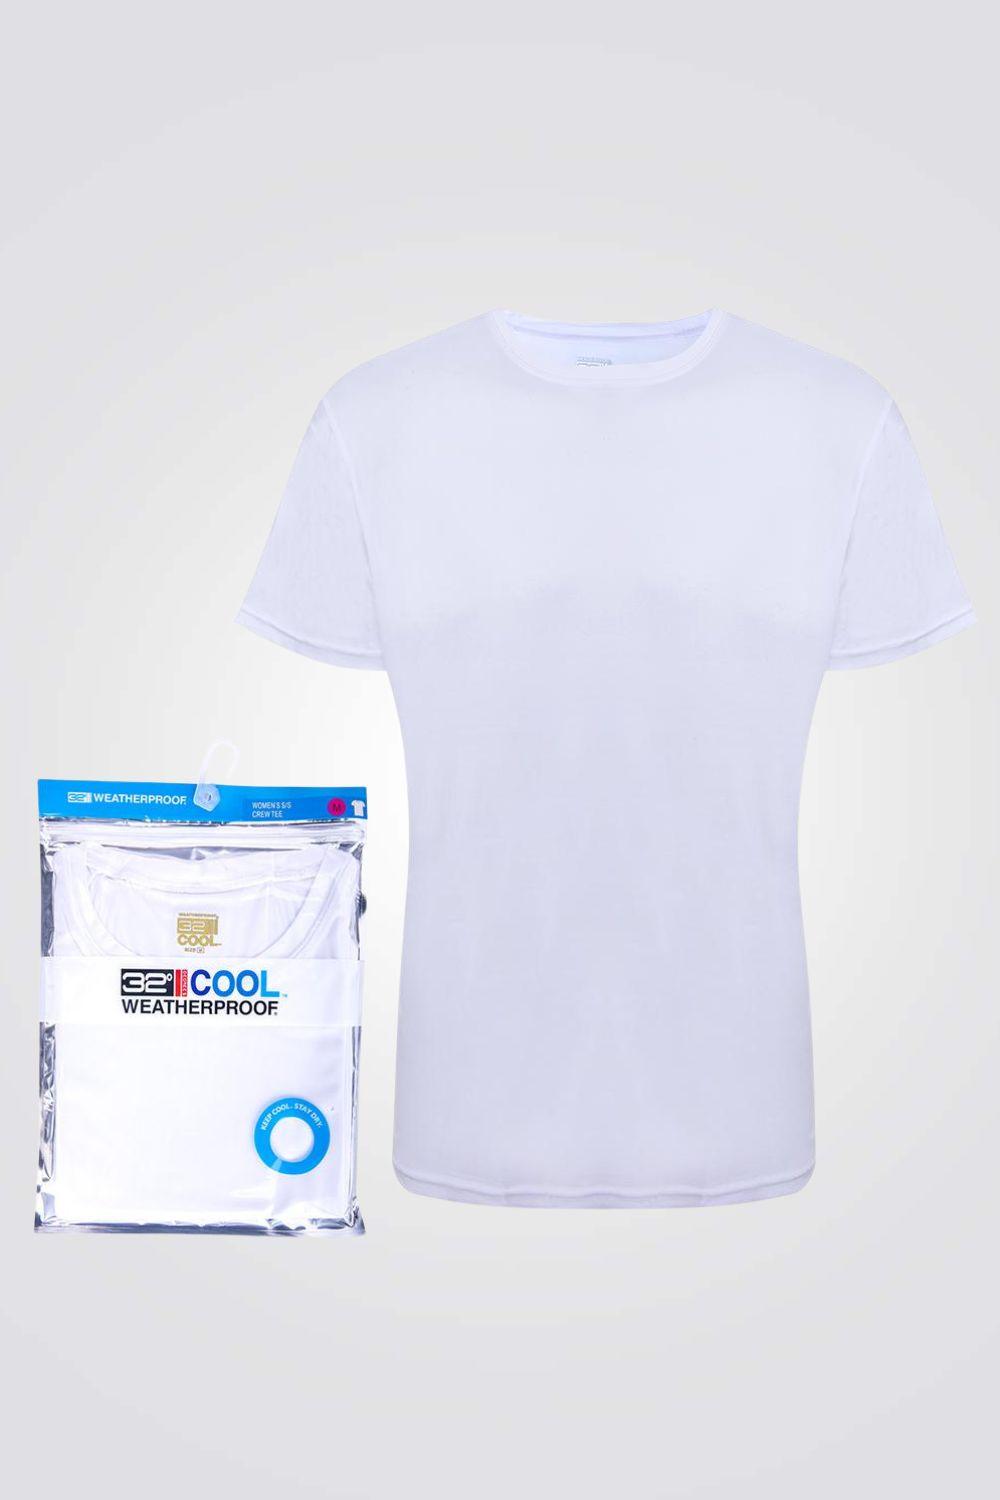 COOL 32 - חולצת דרייפיט לנשים צווארון עגול בצבע לבן - MASHBIR//365